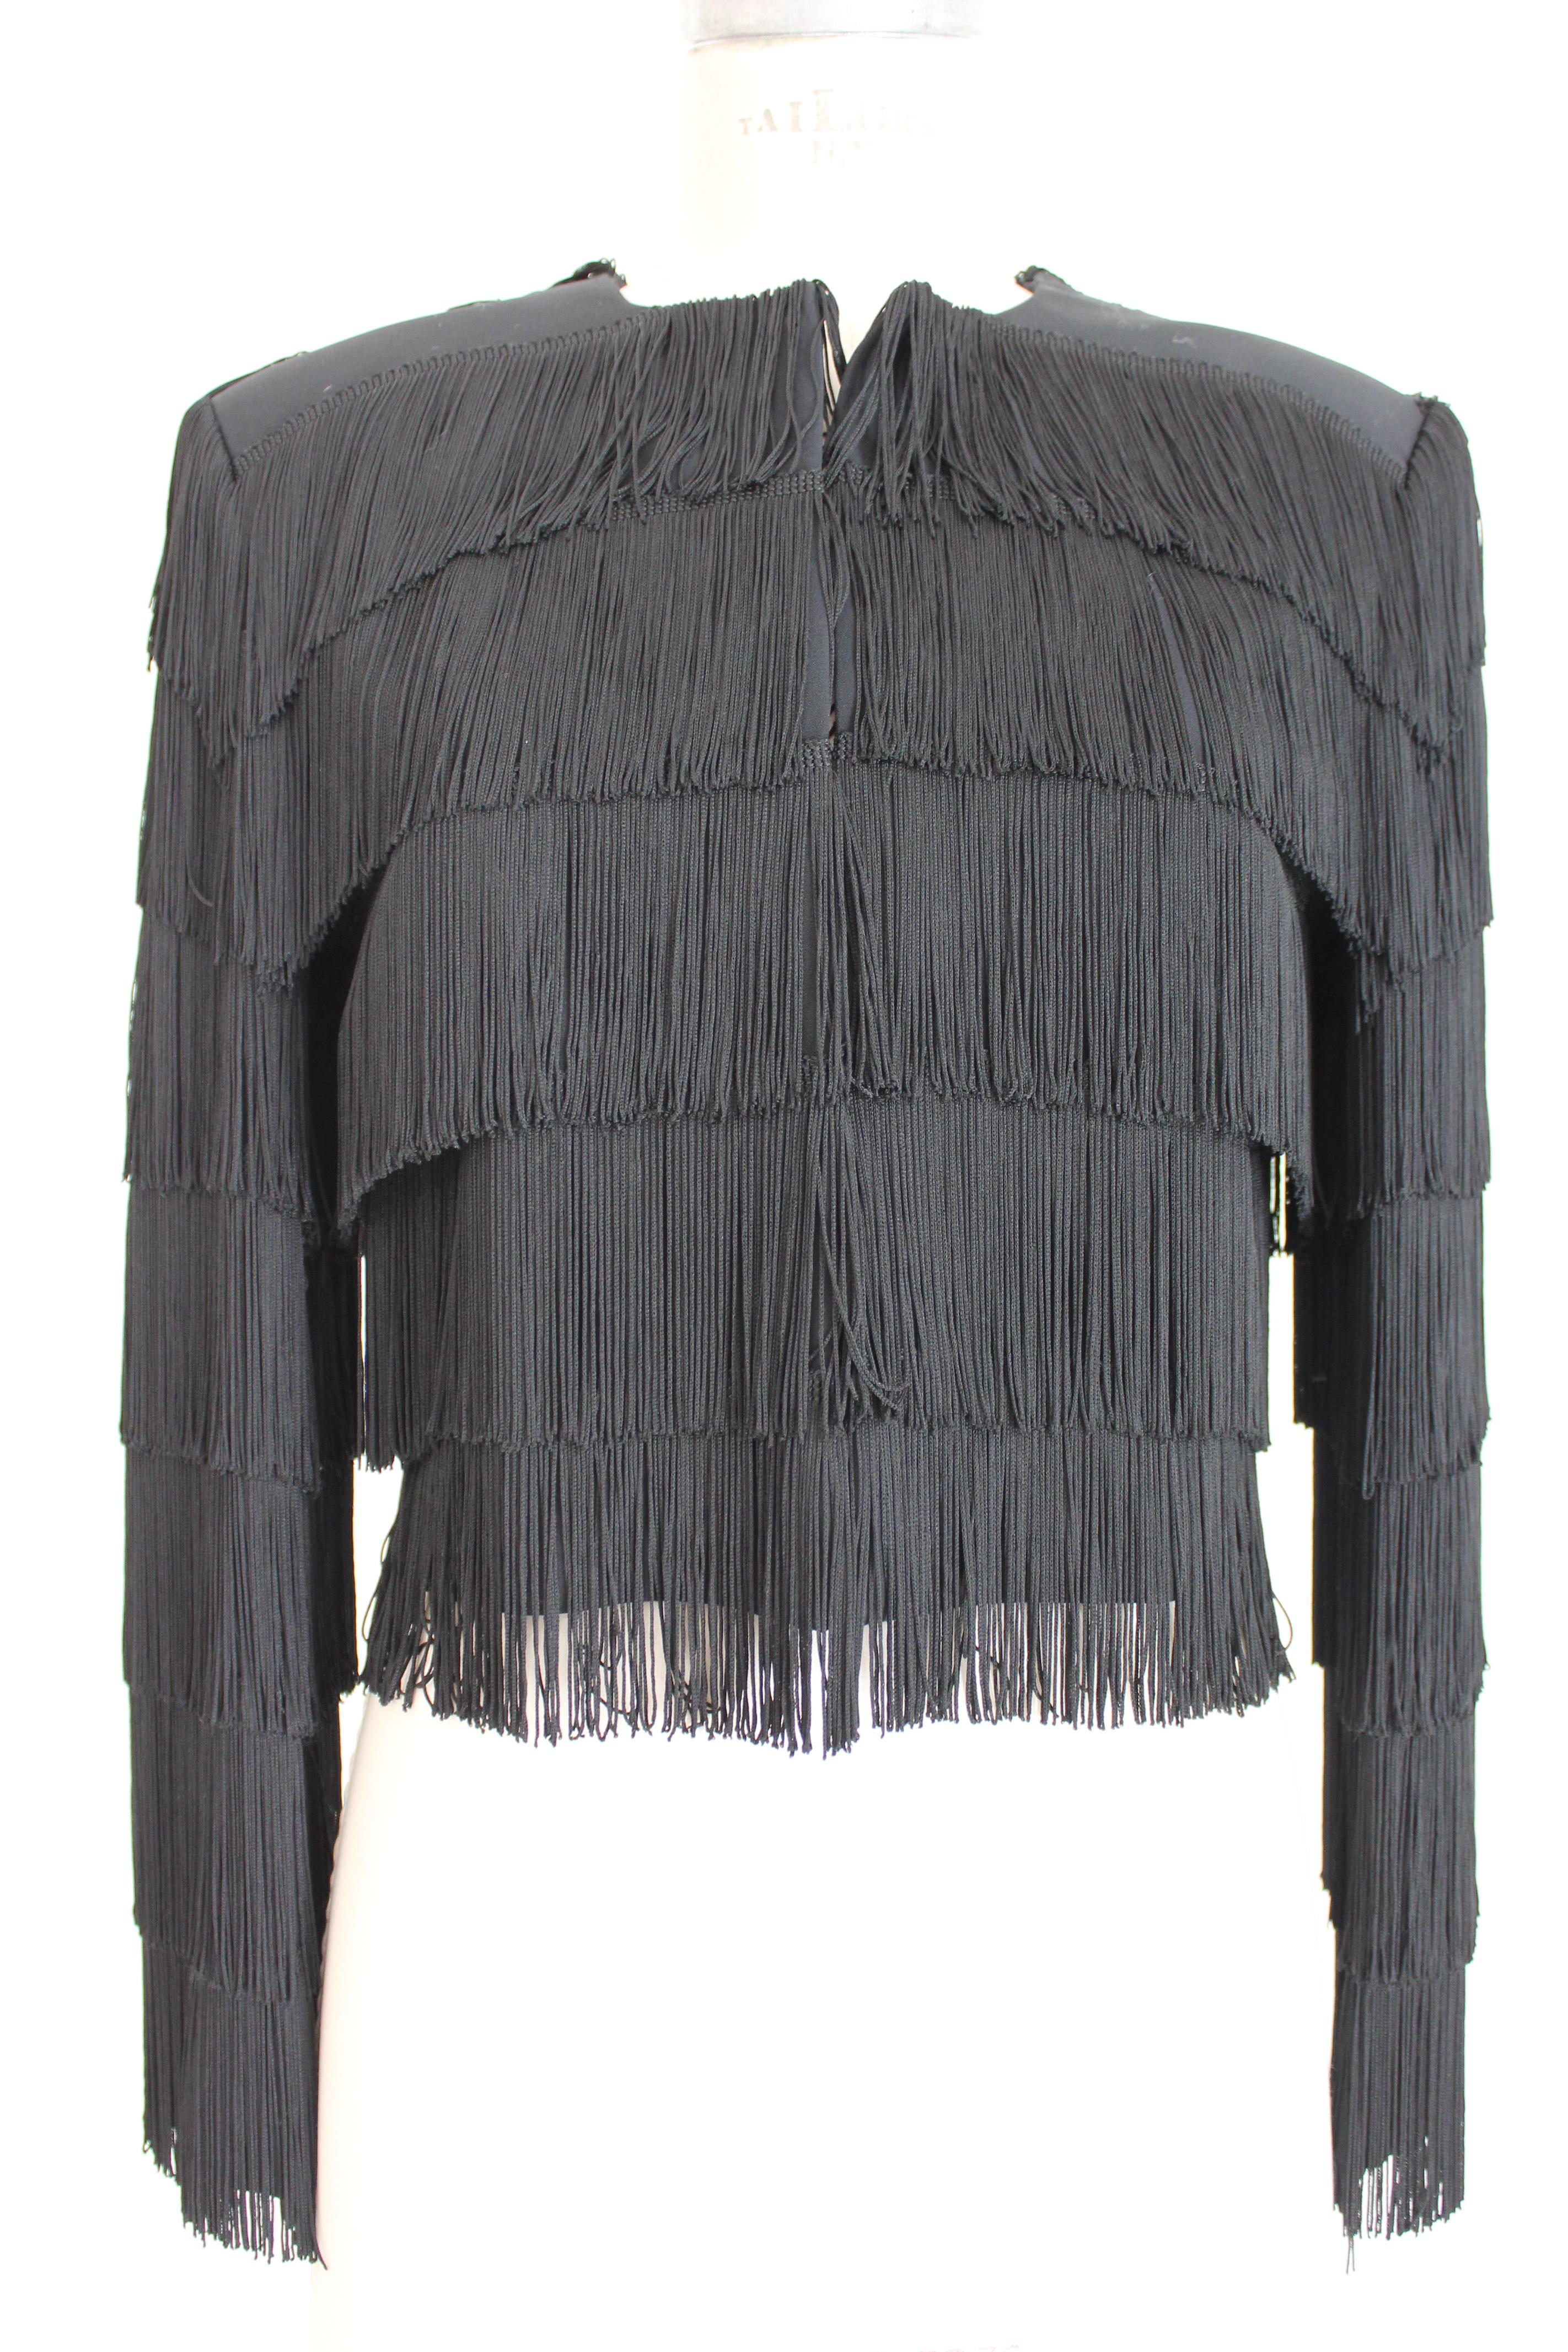 Moschino Black Fringed Charleston Evening Skirt Suit Dress 1990s 2